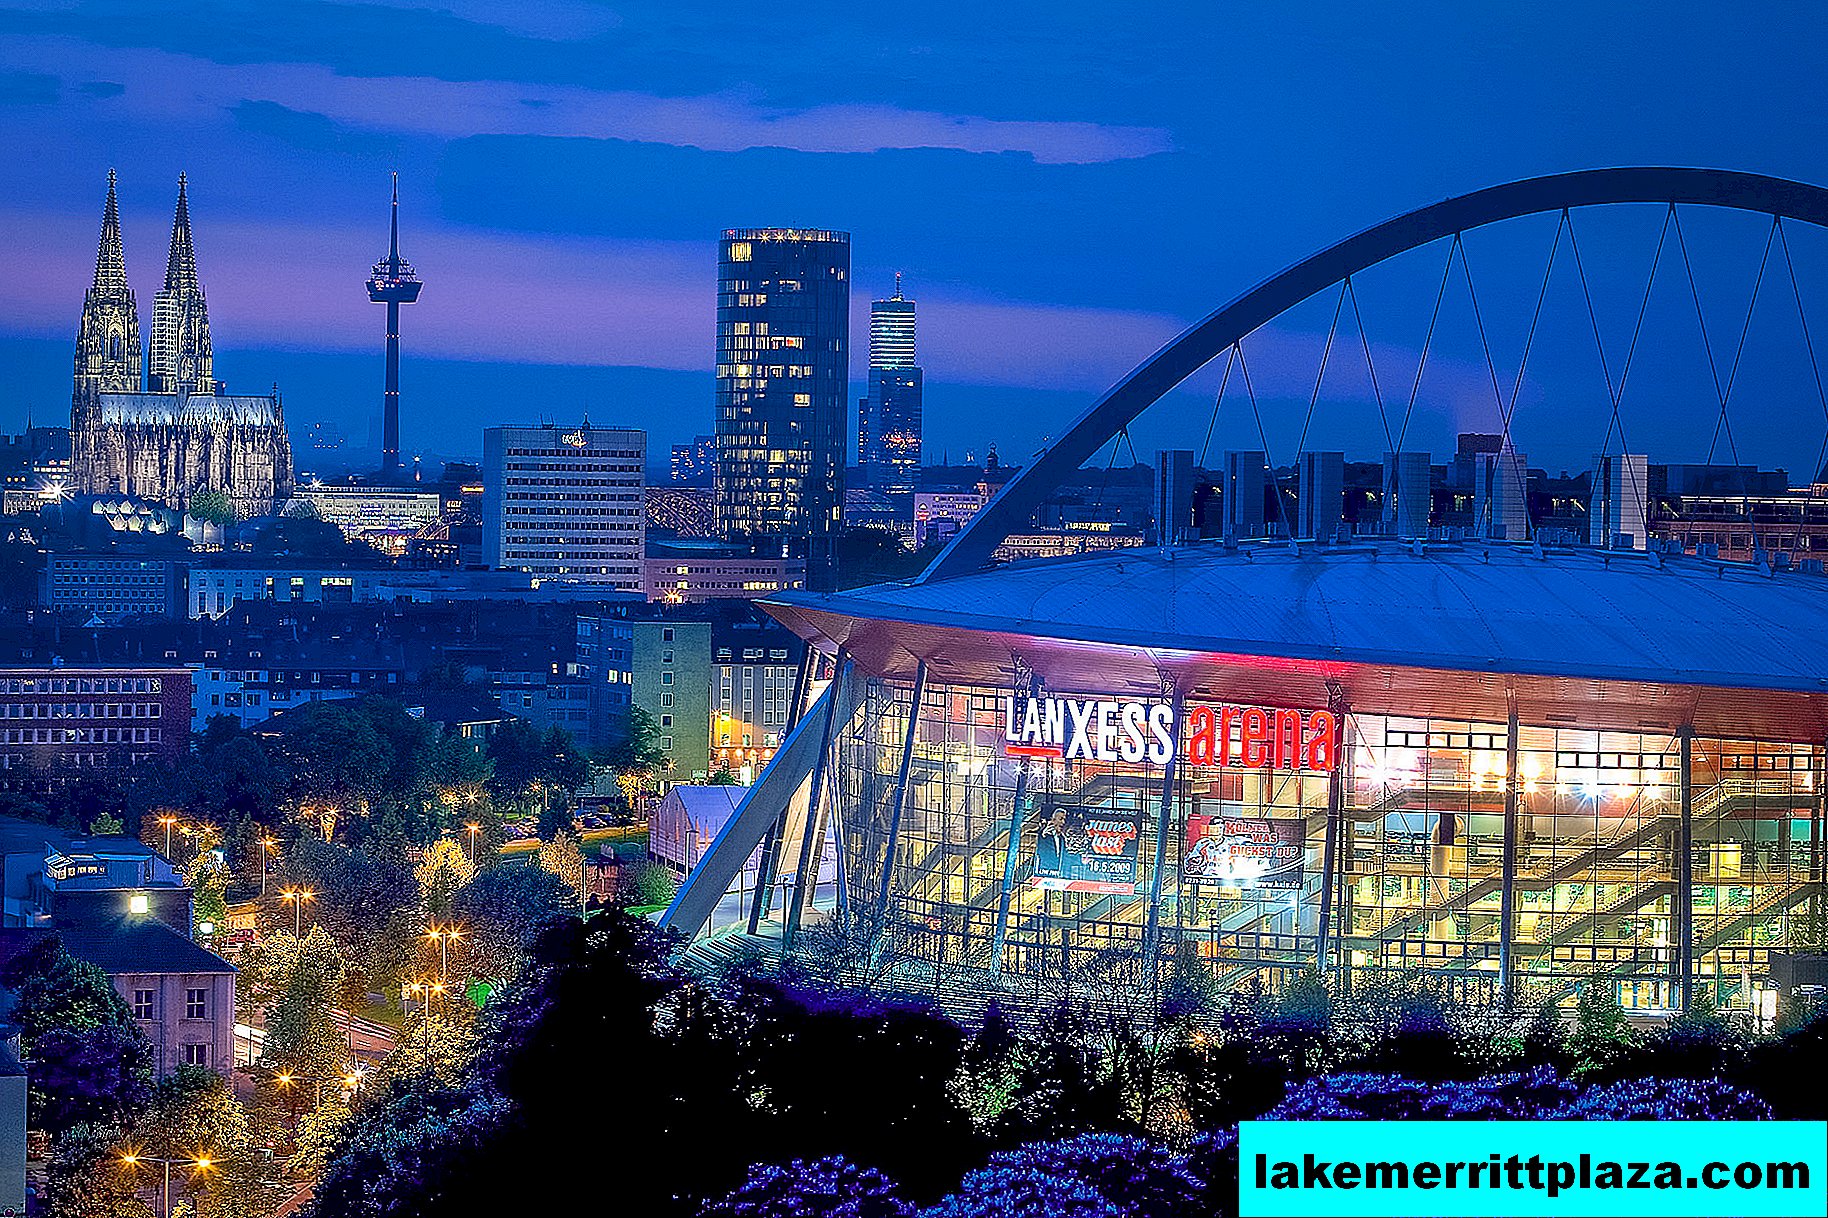 Germany: Lanxess Arena